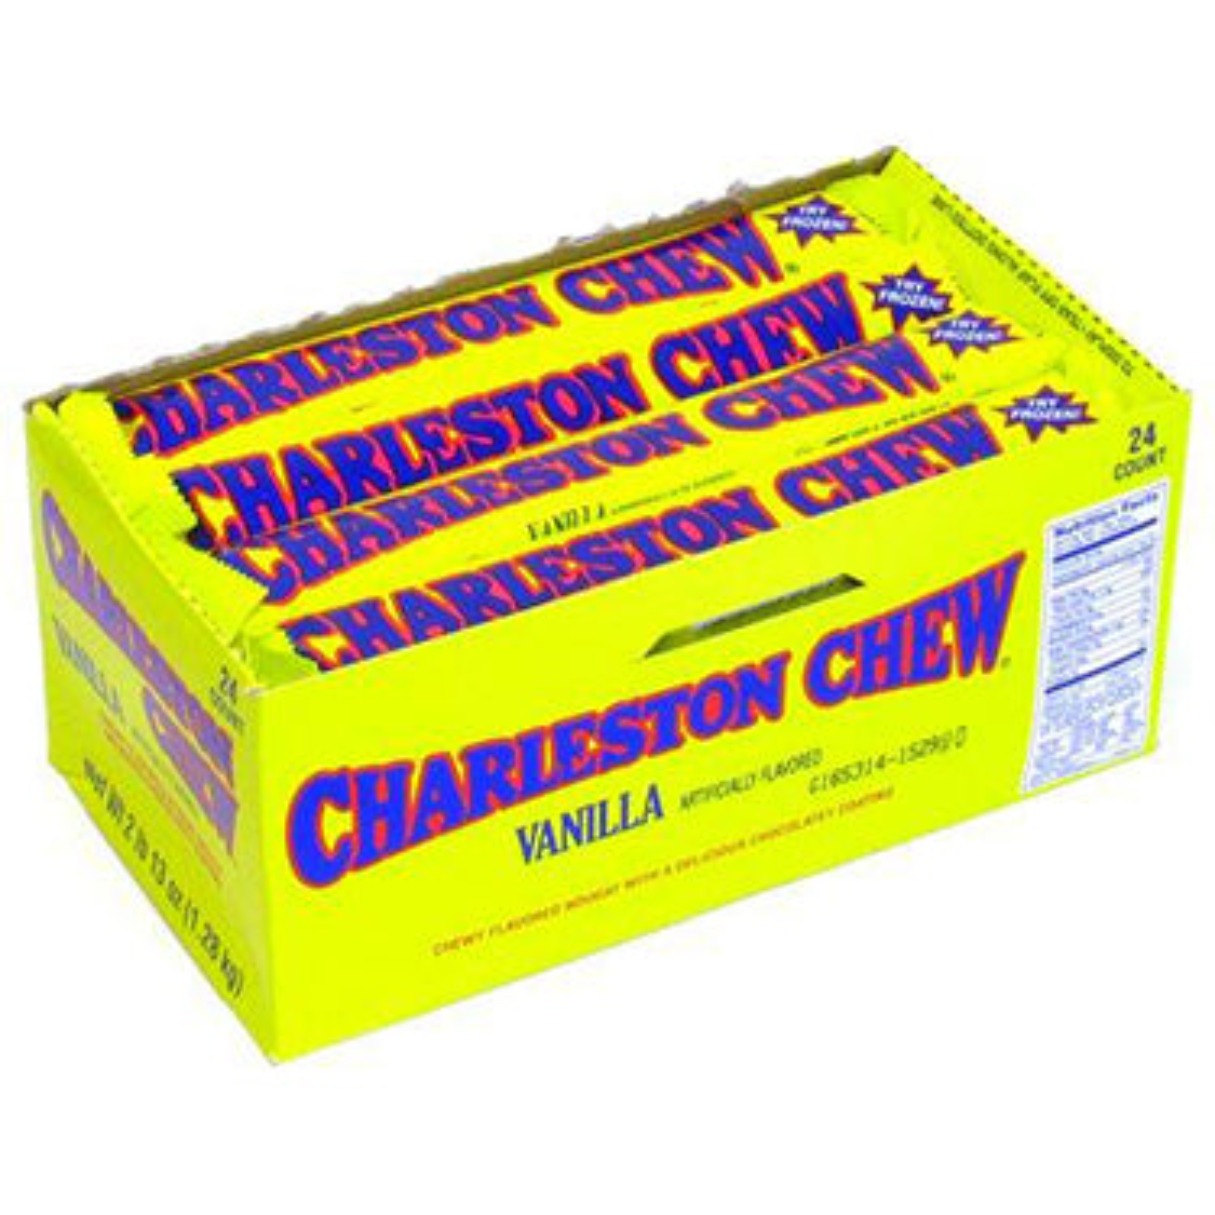 Charleston Chew Vanilla 1.87oz -  24ct